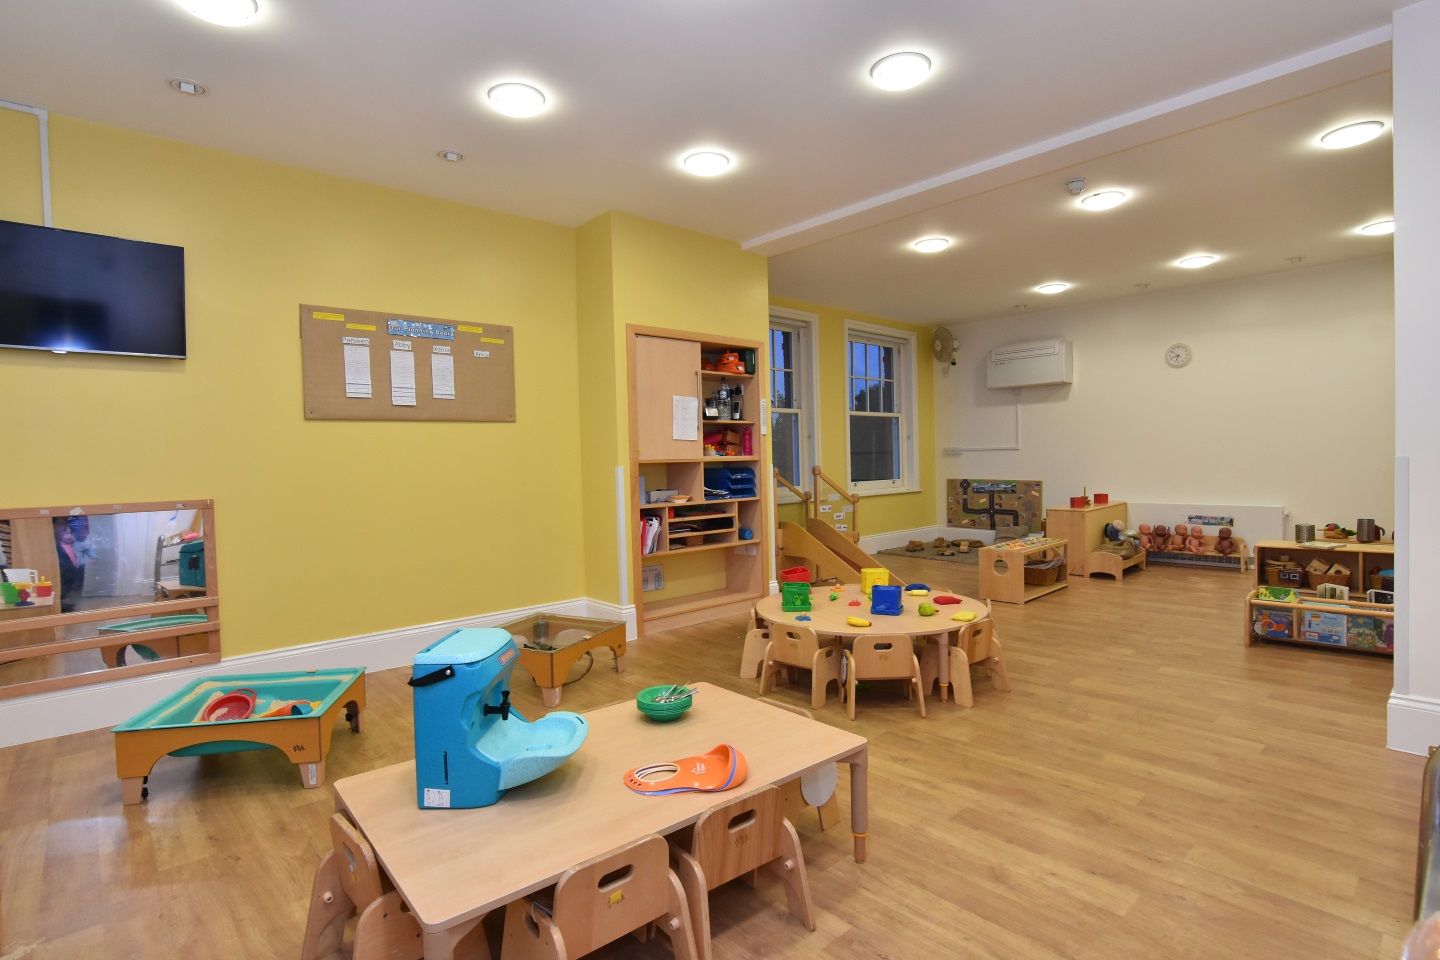 Bright Horizons Kingston Day Nursery and Preschool London 03333 317090